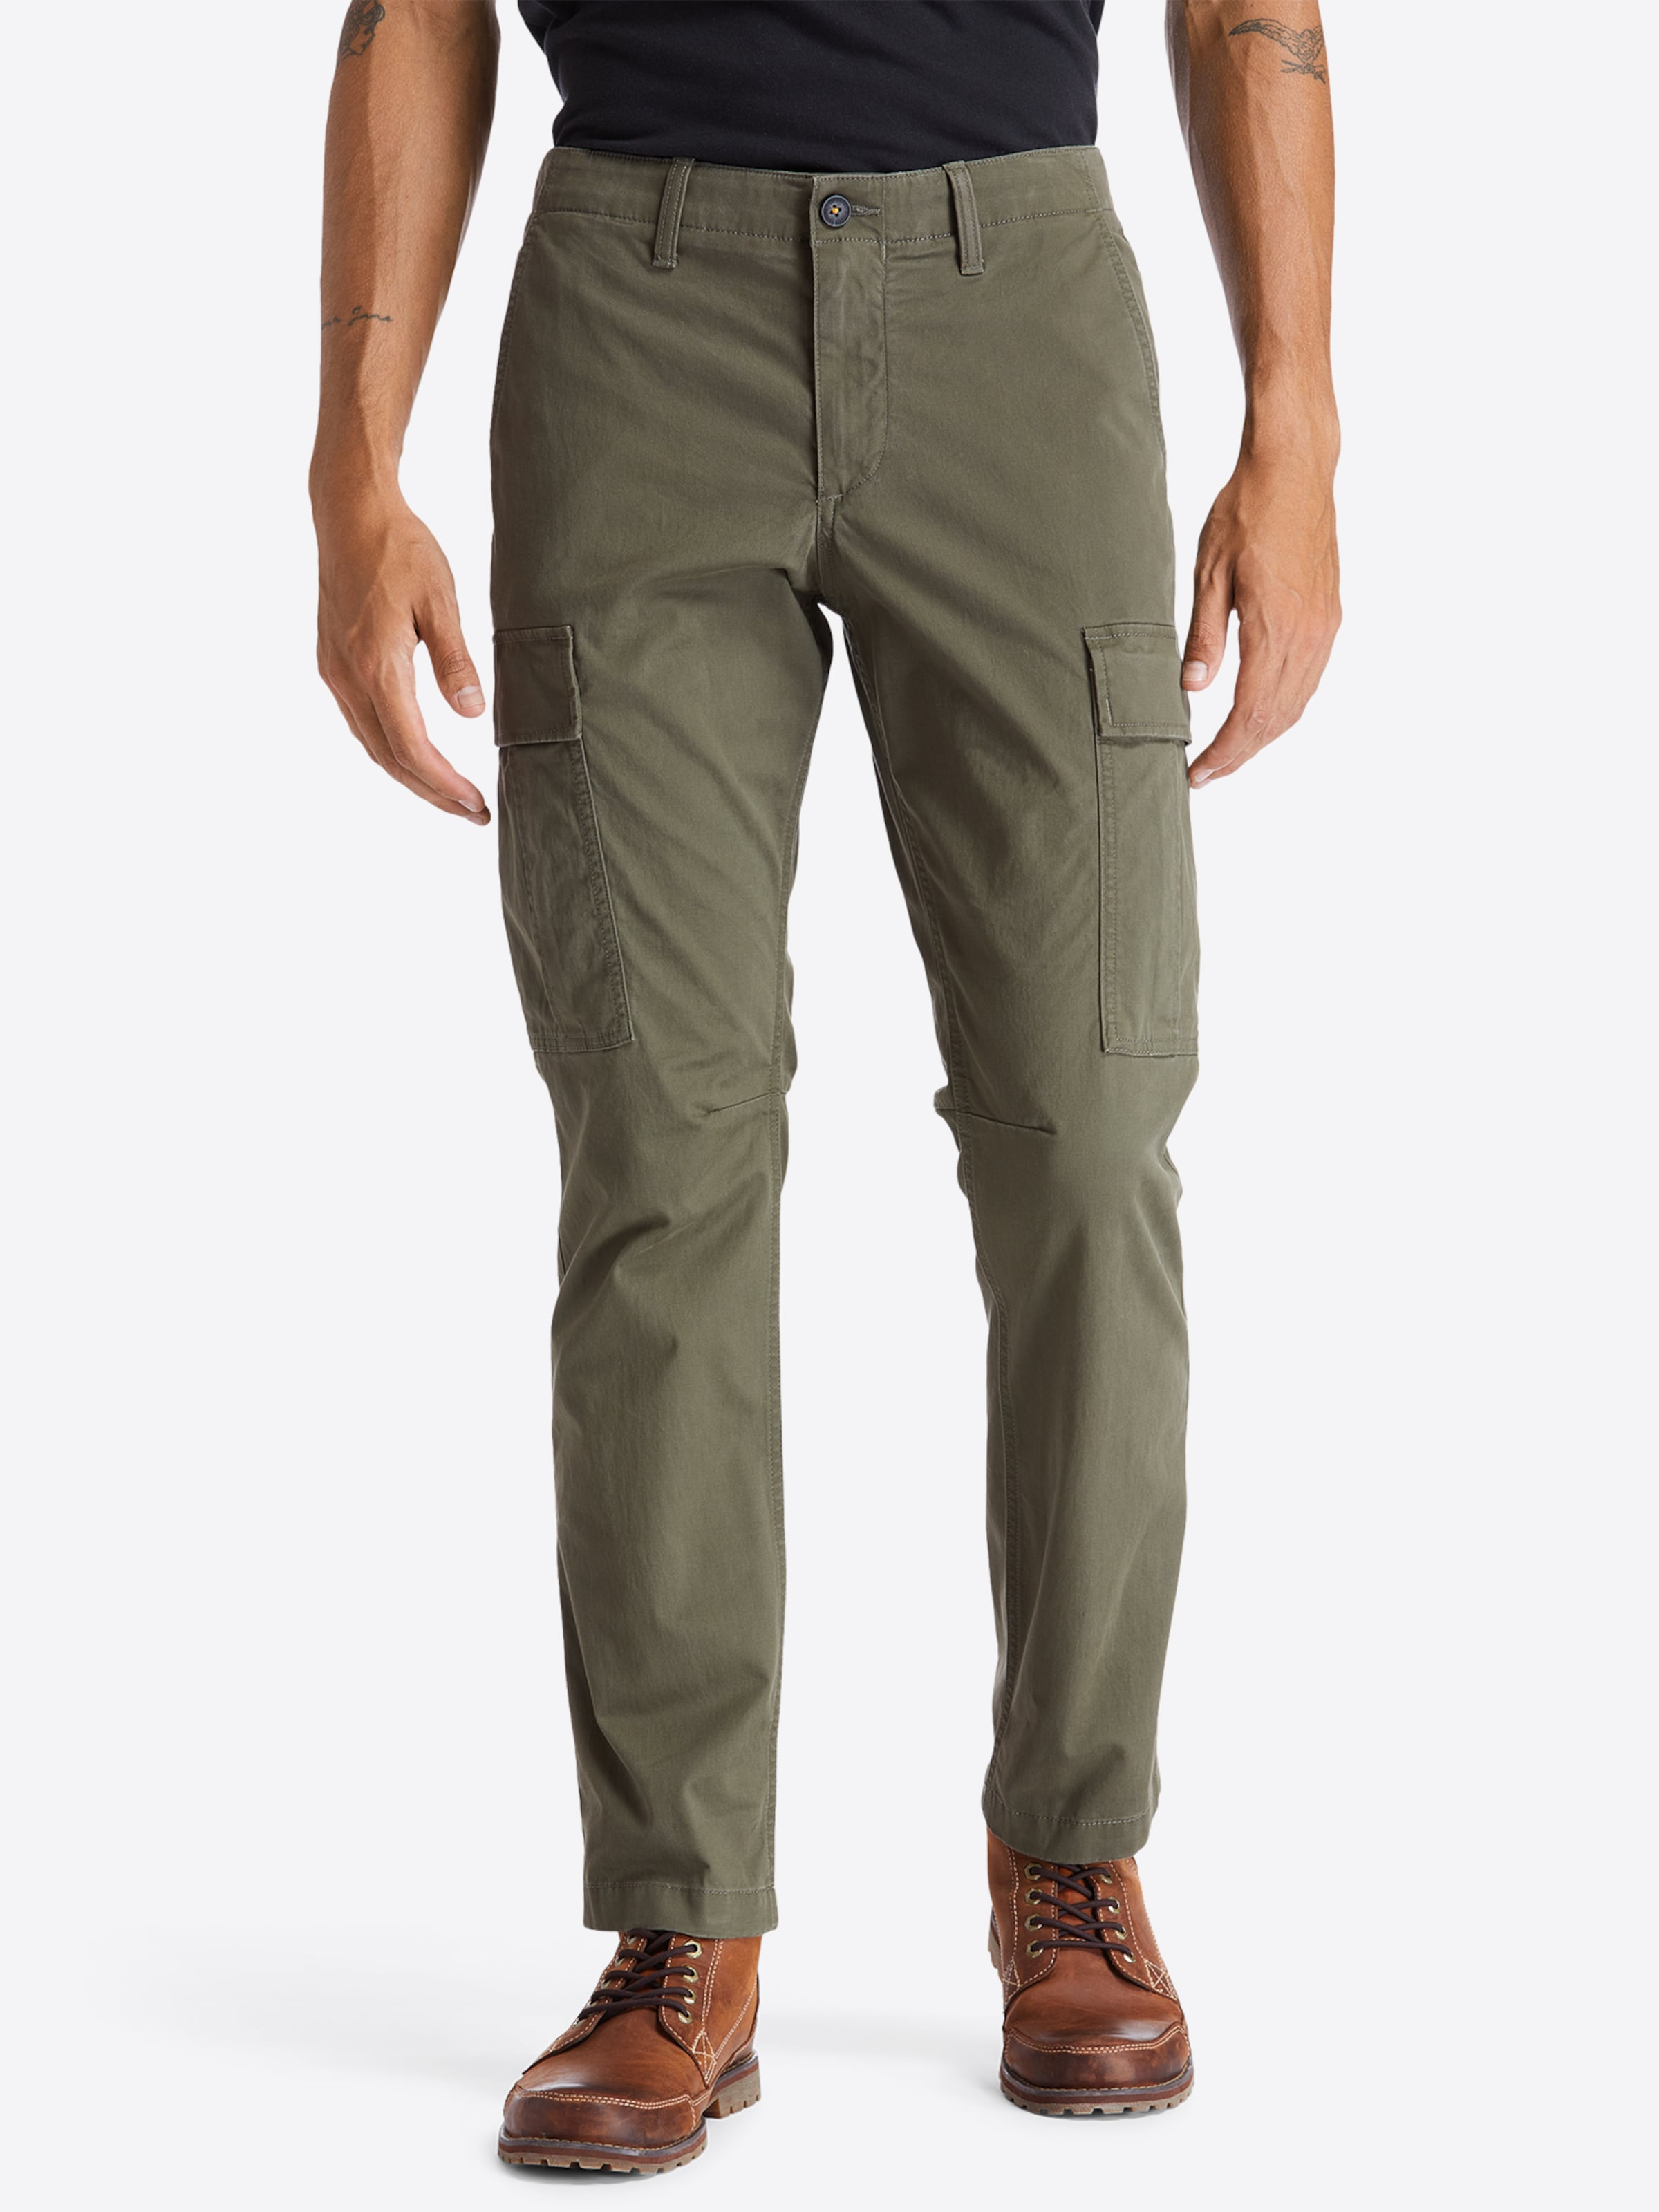 Buy Timberland Mens Squam Lake Steel Grey Cargo Pants 32X32 Straight  Fit at Amazonin